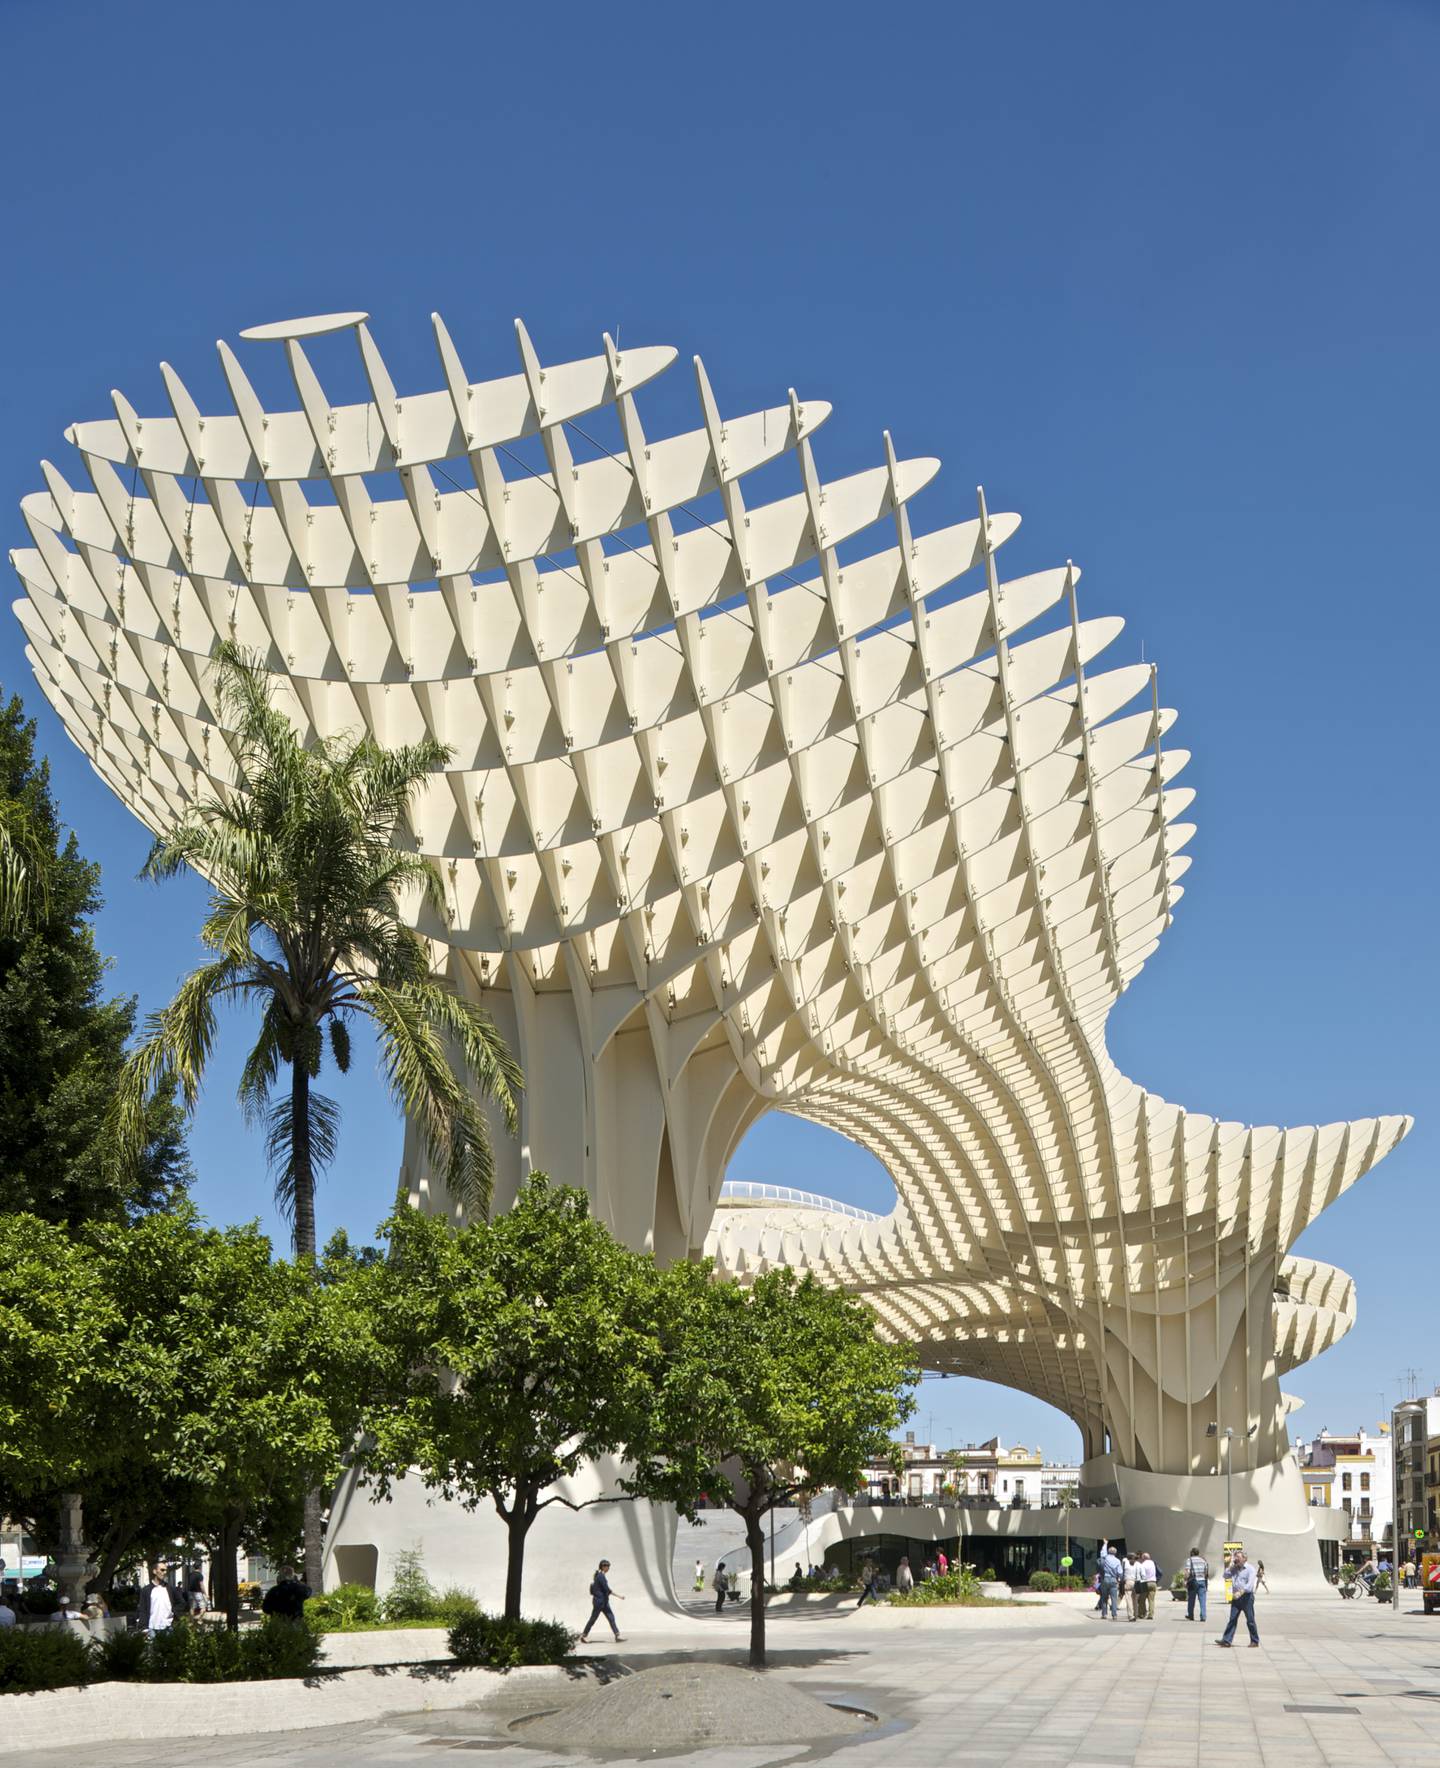 Metropol Parasol in Sevilla, Spain. Getty Images